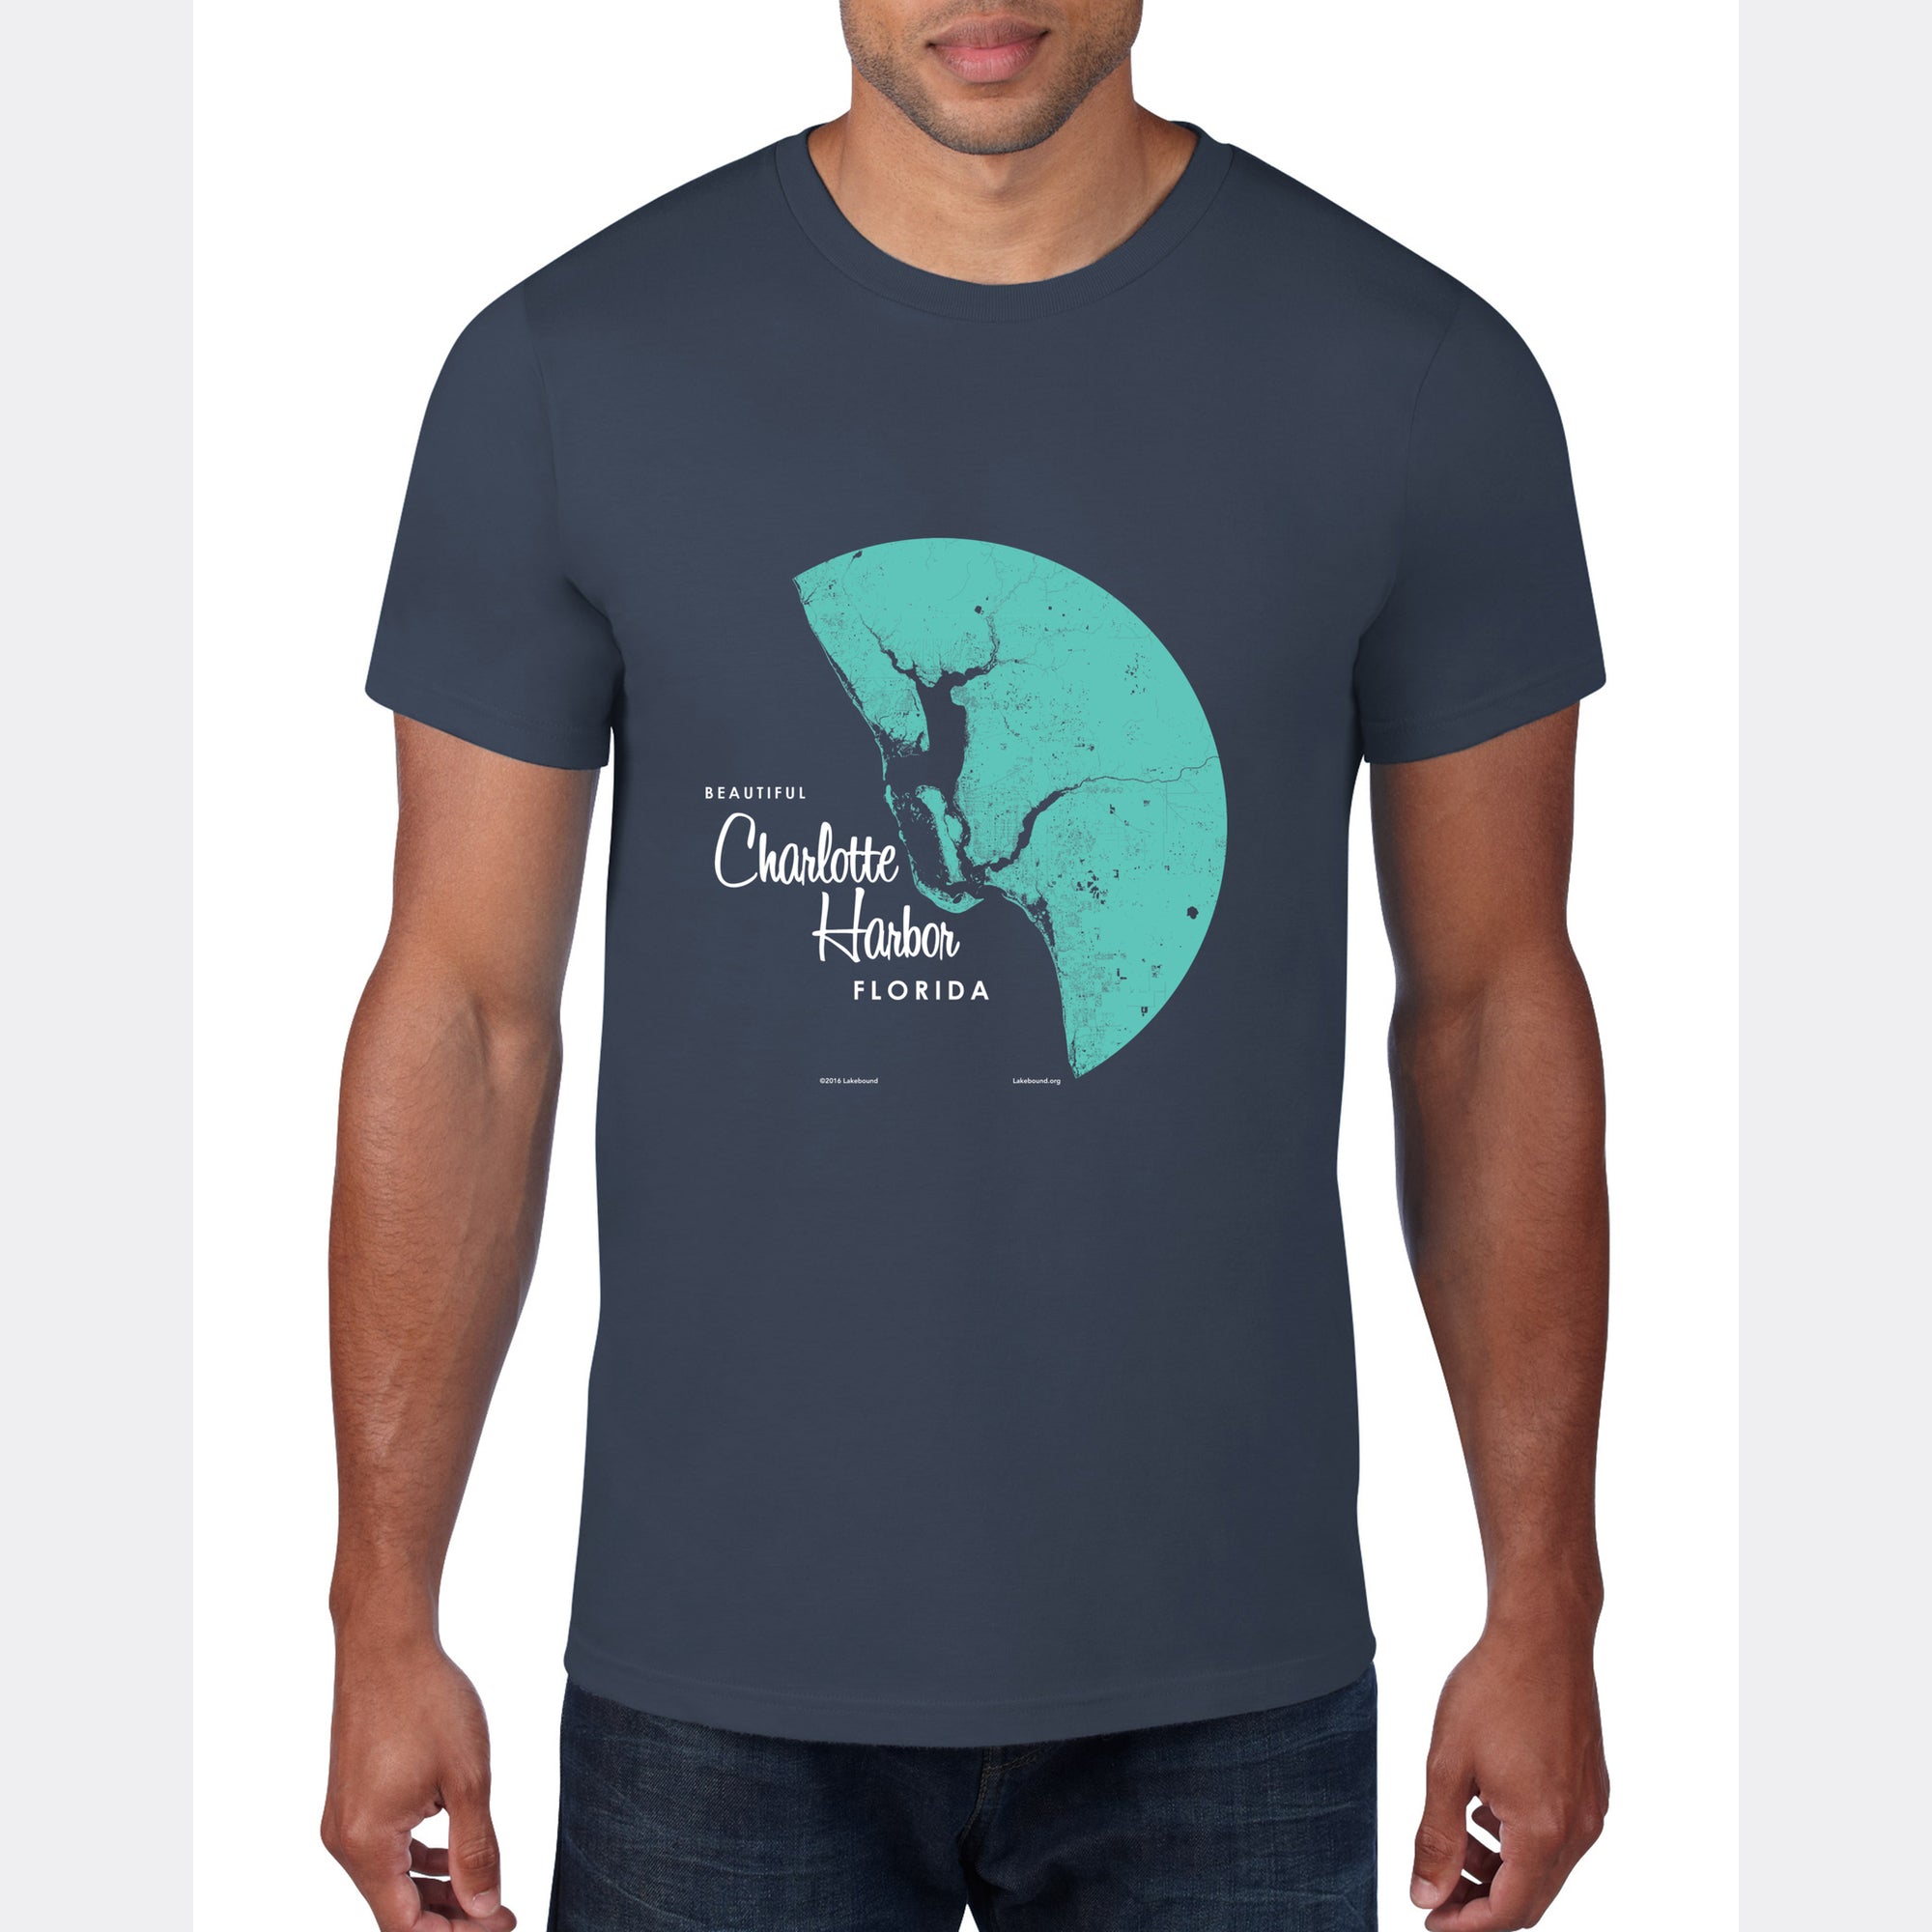 Charlotte Harbor Florida, T-Shirt